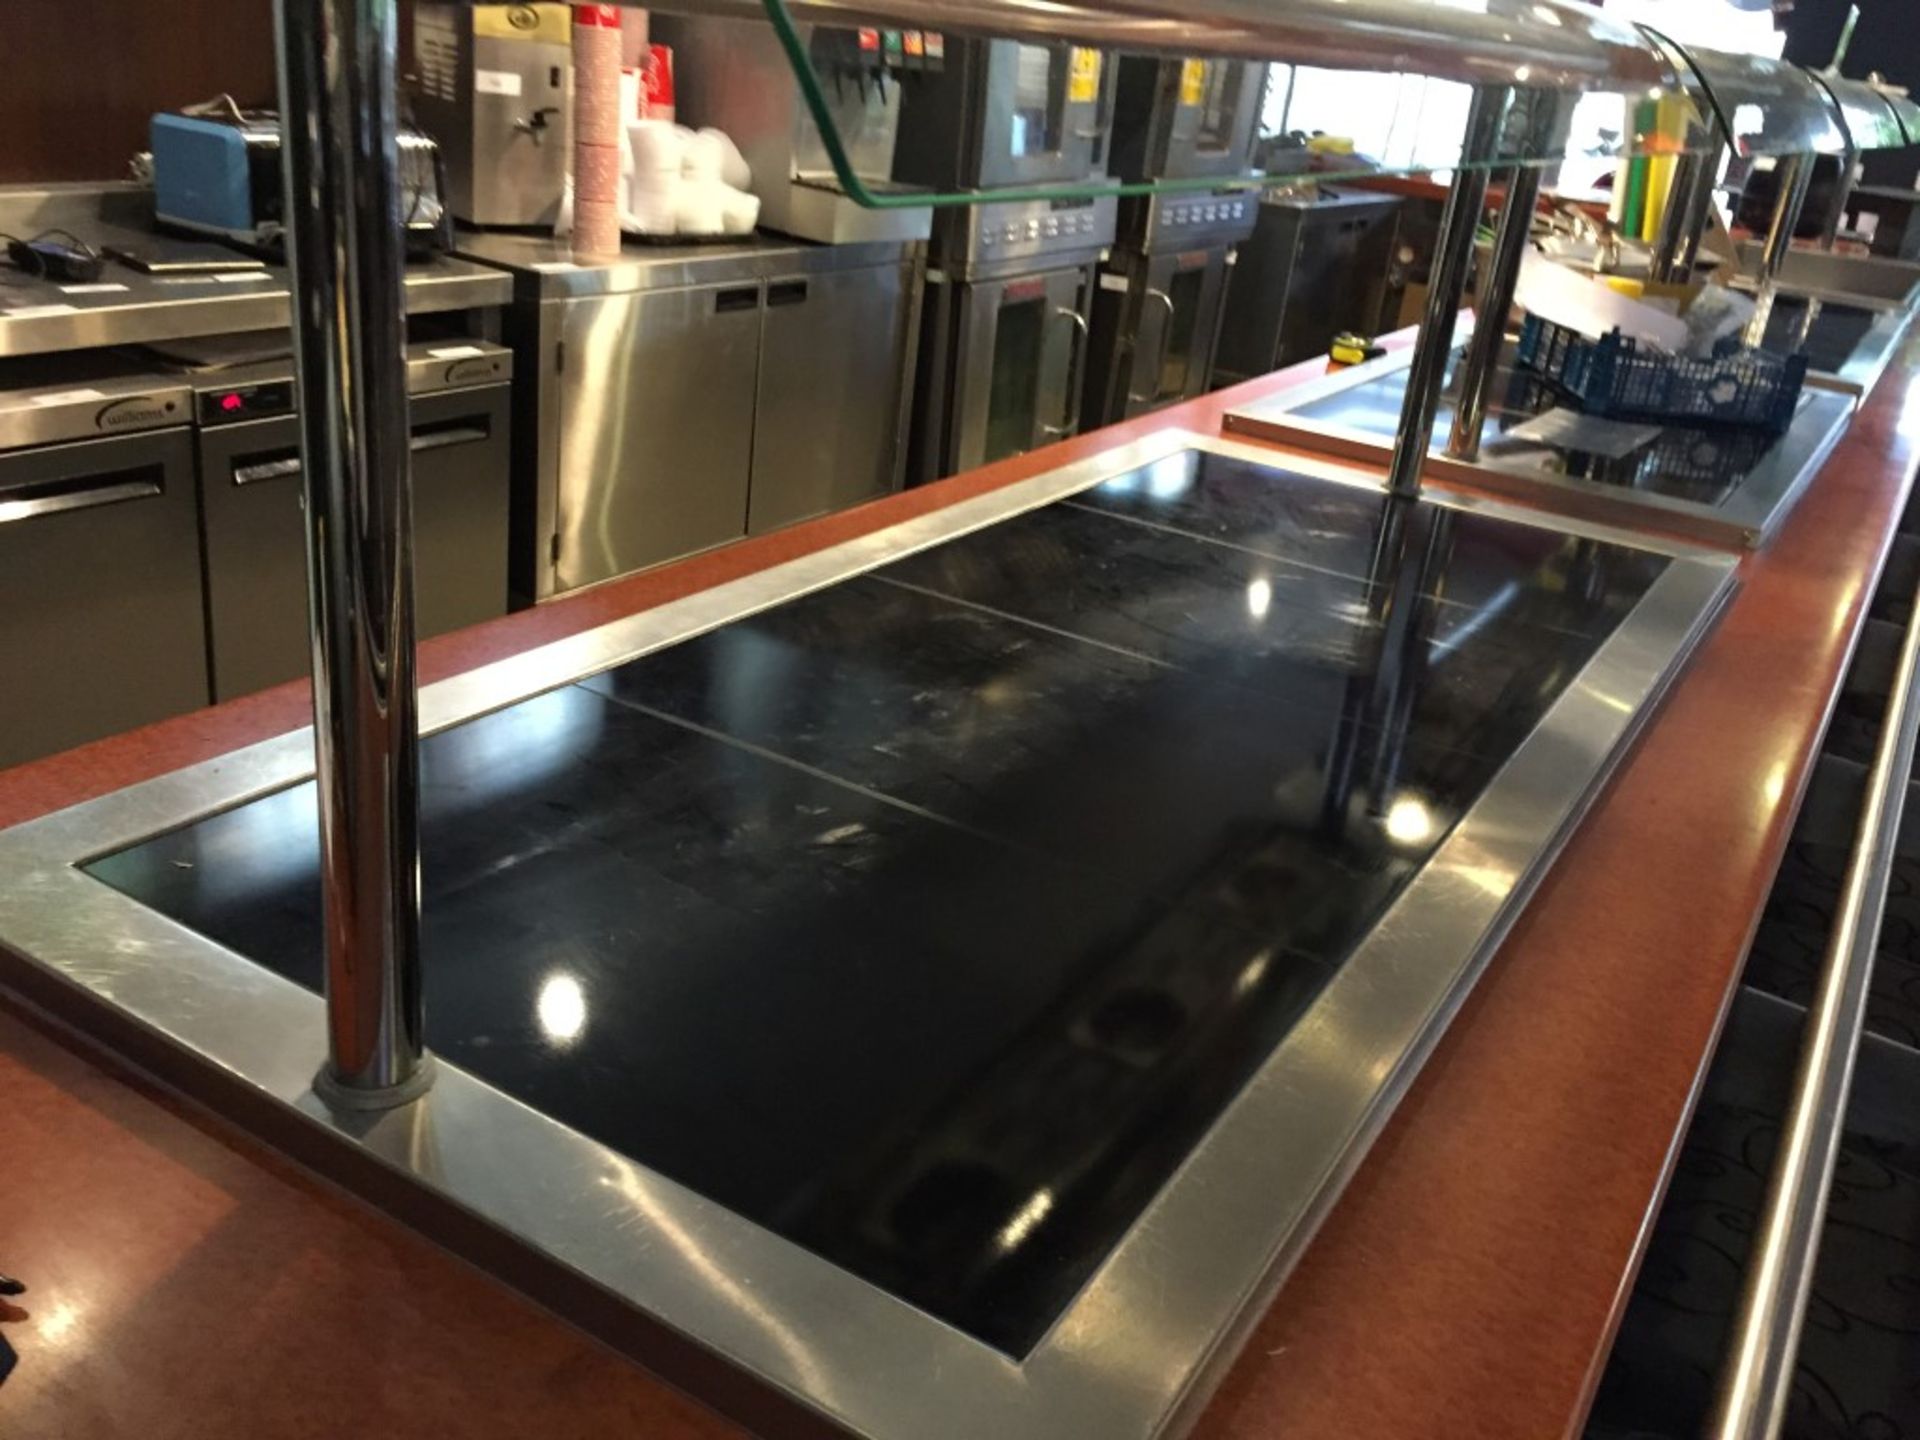 1 x CED Designline Self Serve Ceran Glass Hotplate - Counter Drop In Design With Overhead Heat - Image 3 of 5